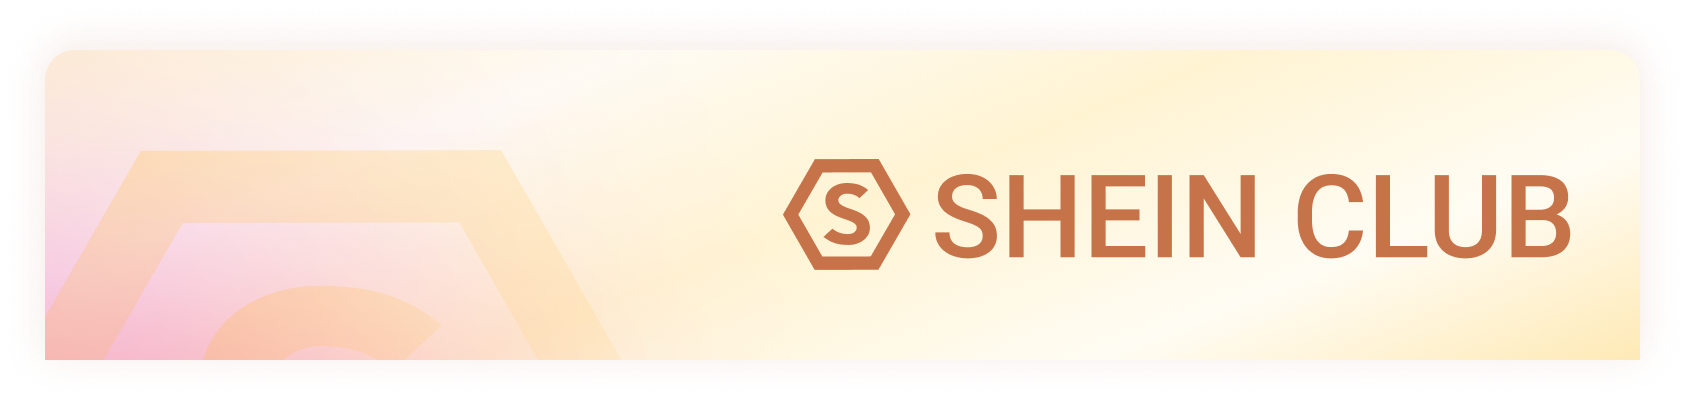 Homepage - SHEIN Group